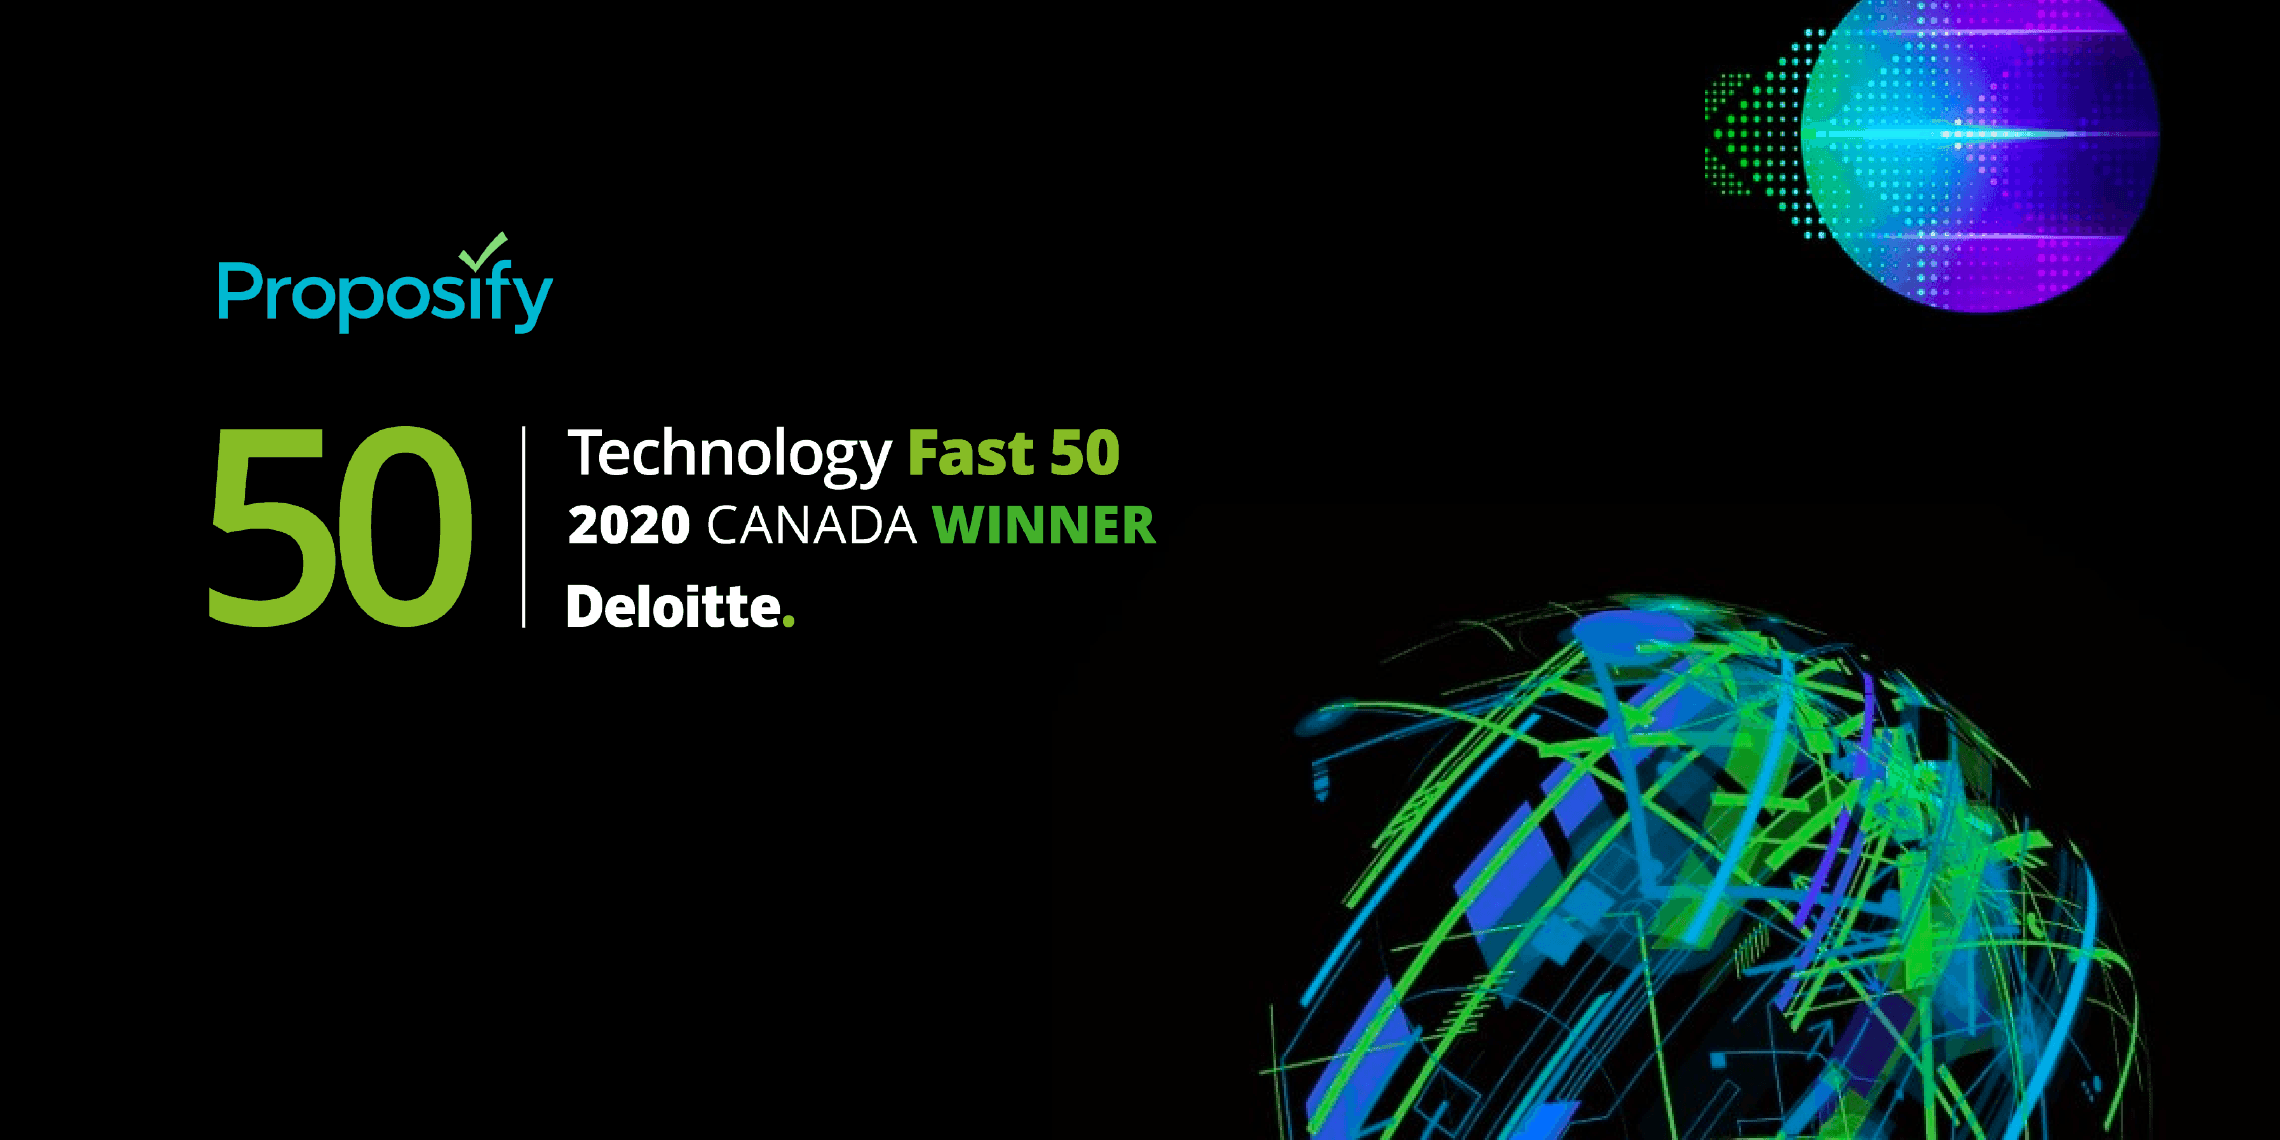 deloitte technology fast 50 2020 proposify announcement